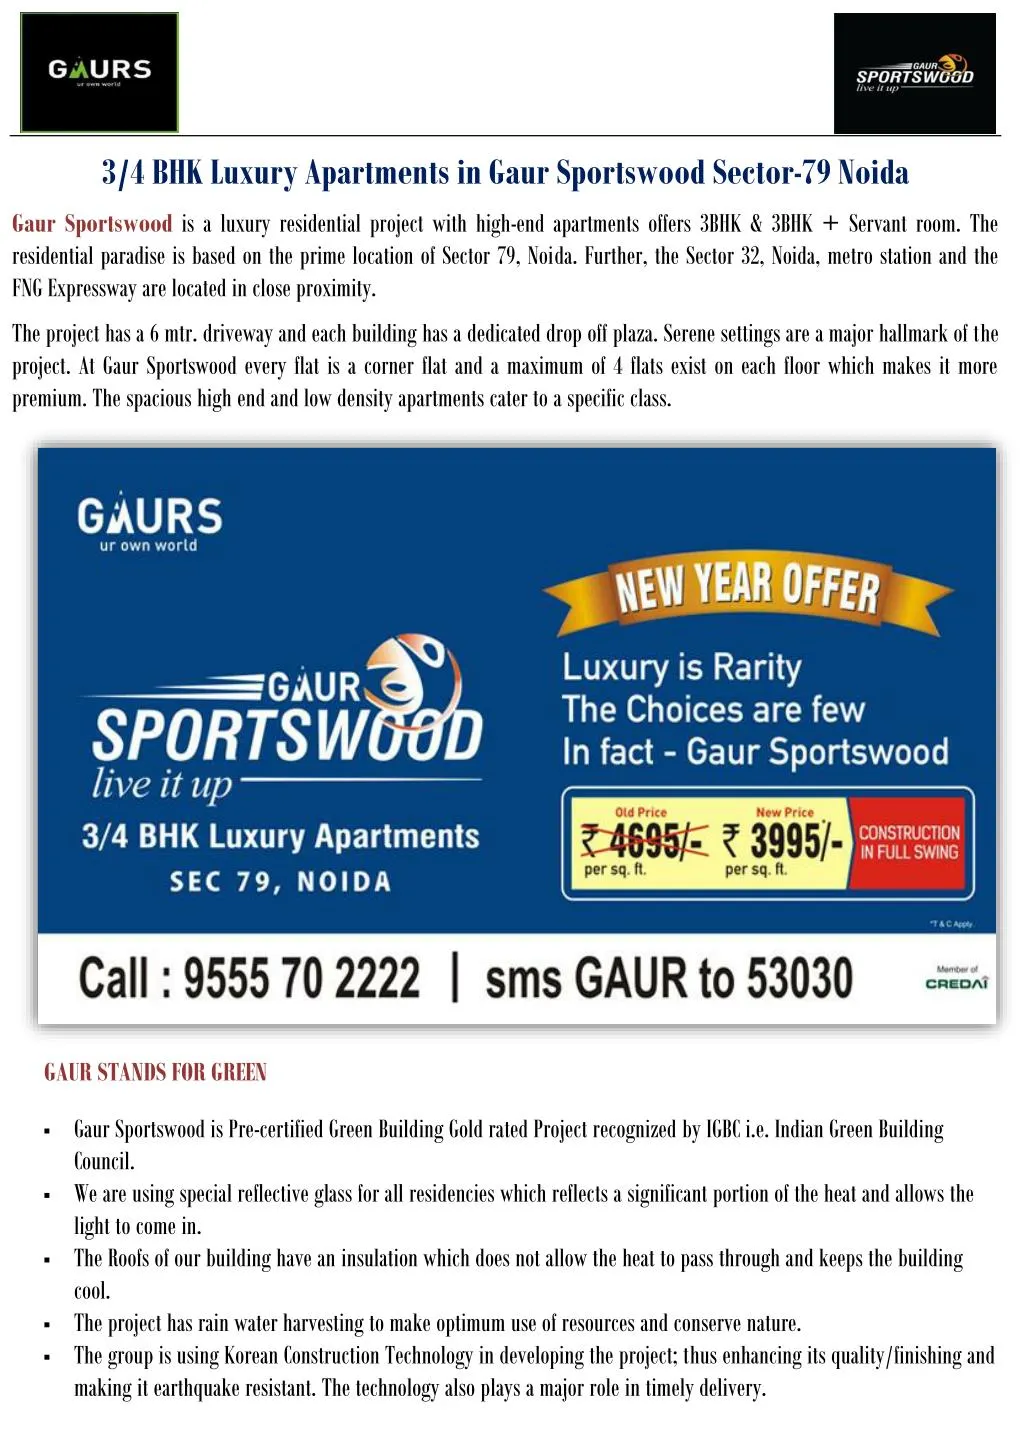 3 4 bhk luxury apartments in gaur sportswood